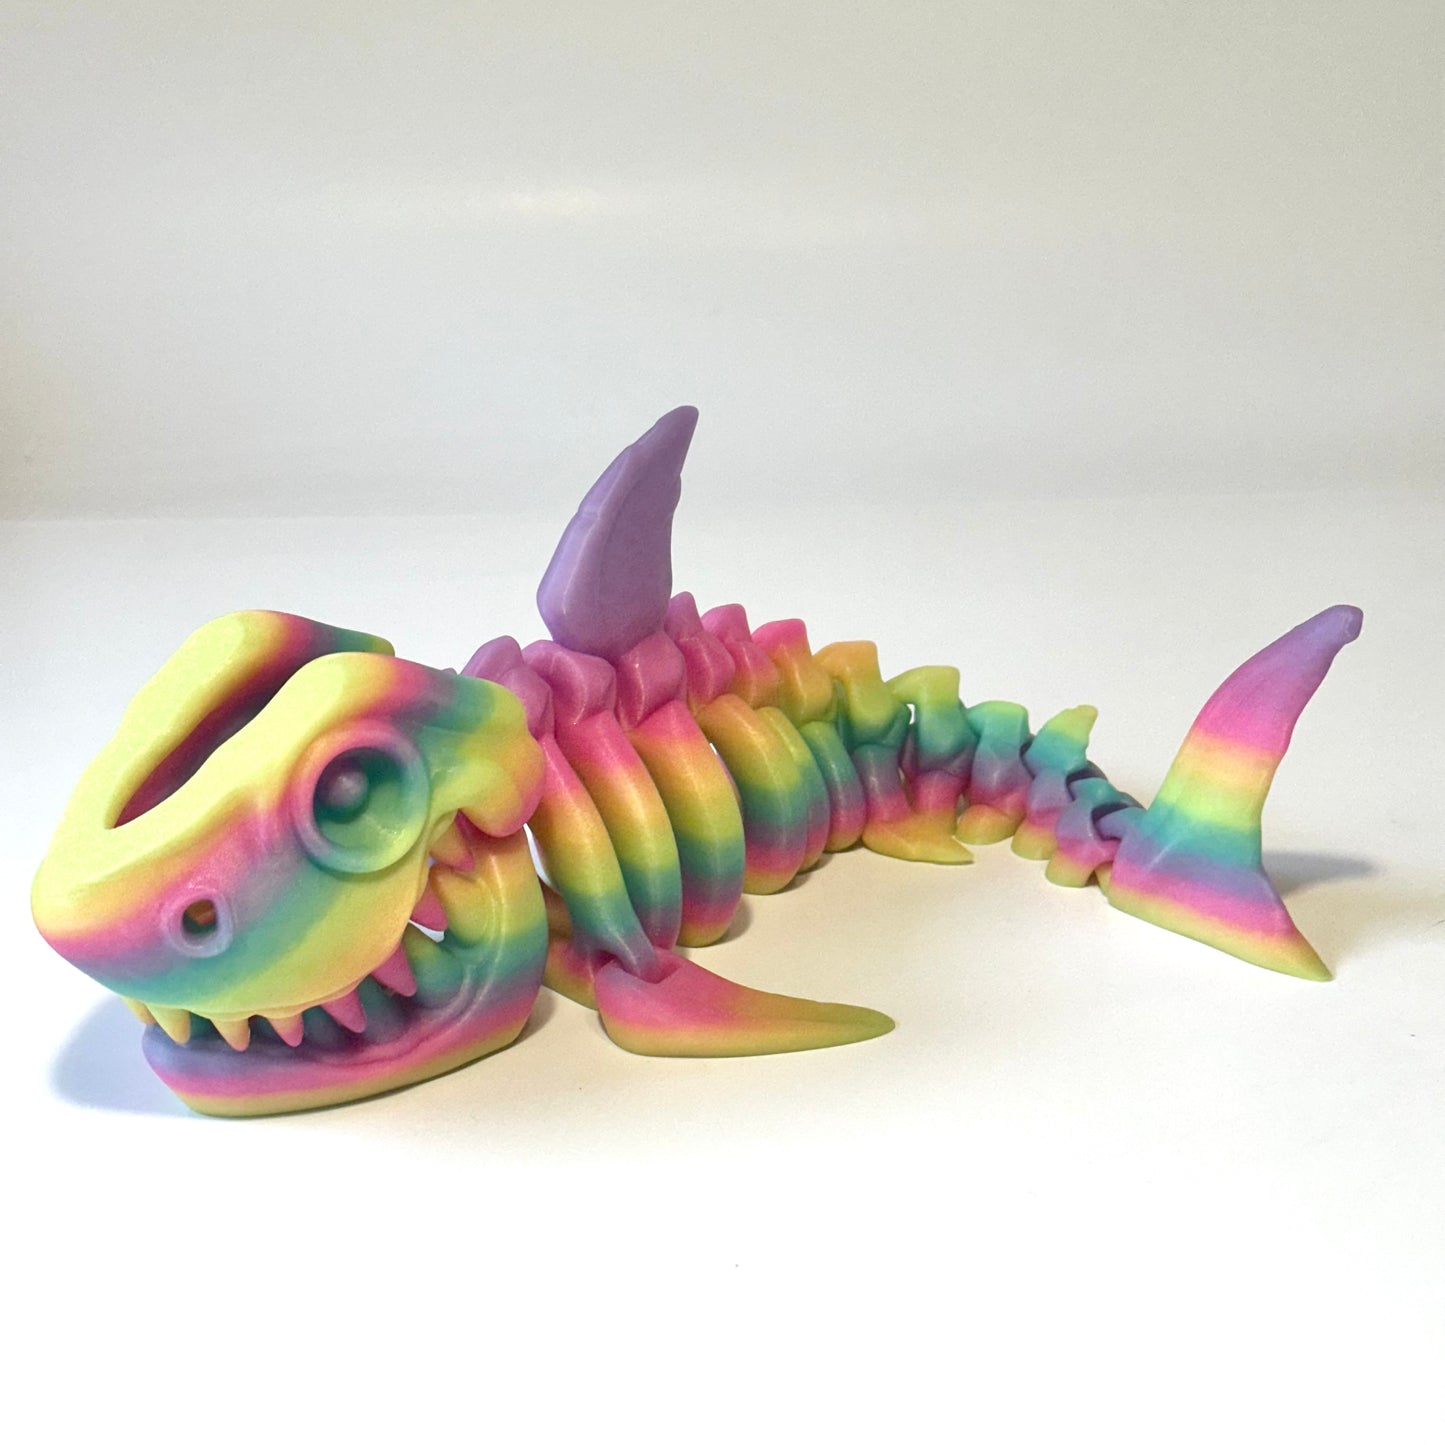 Giant Shark - 3D Printed Articulating